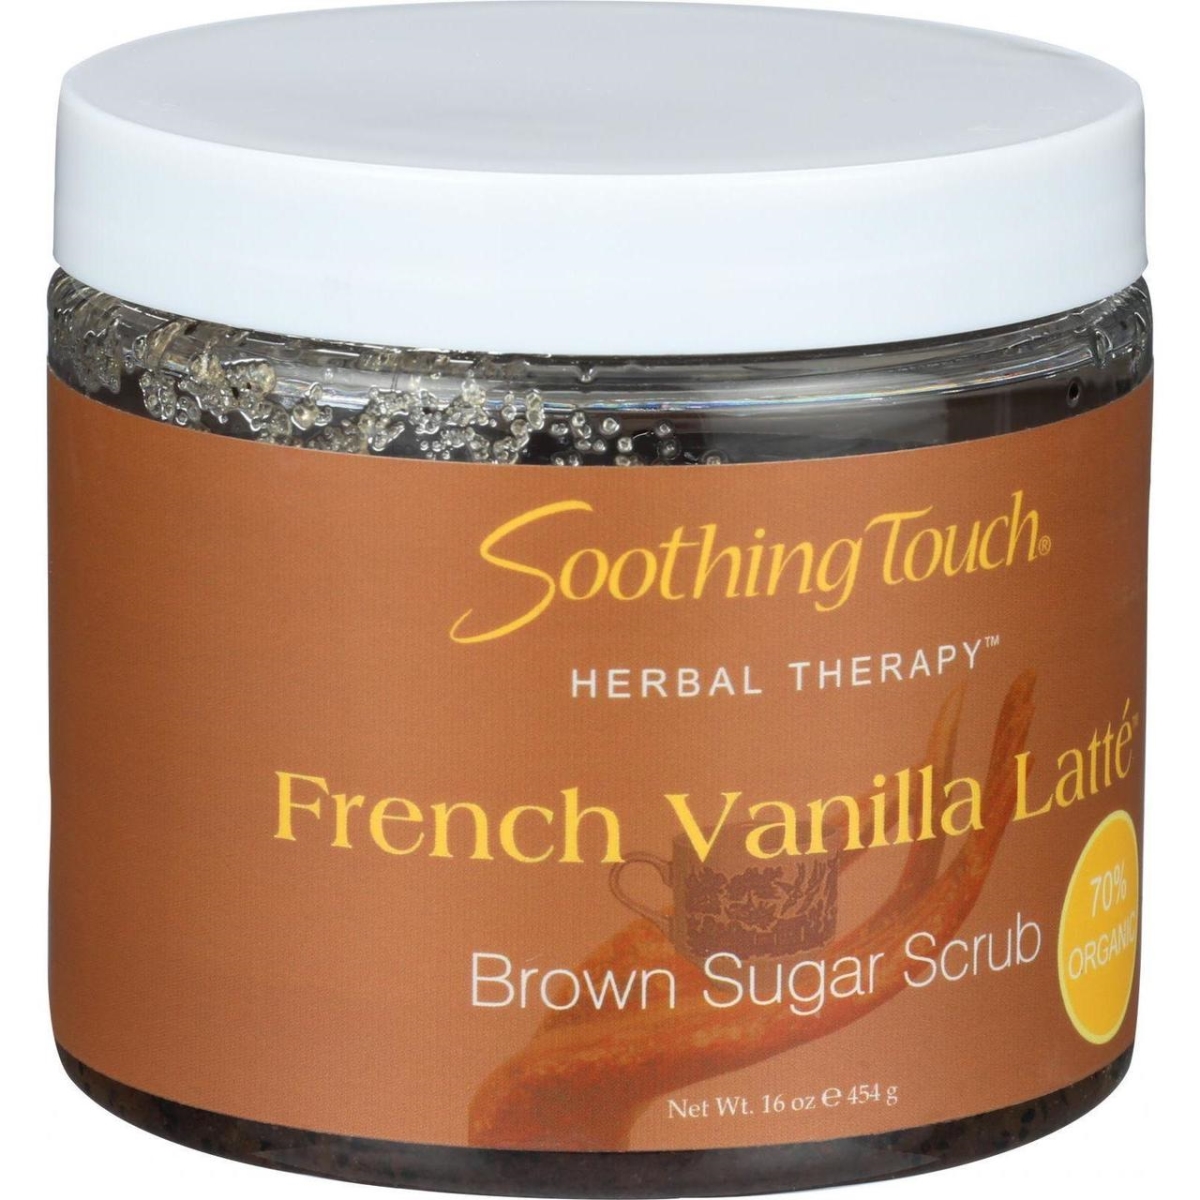 Hg0516724 16 Oz Brown Sugar Scrub - French Vanilla Latte